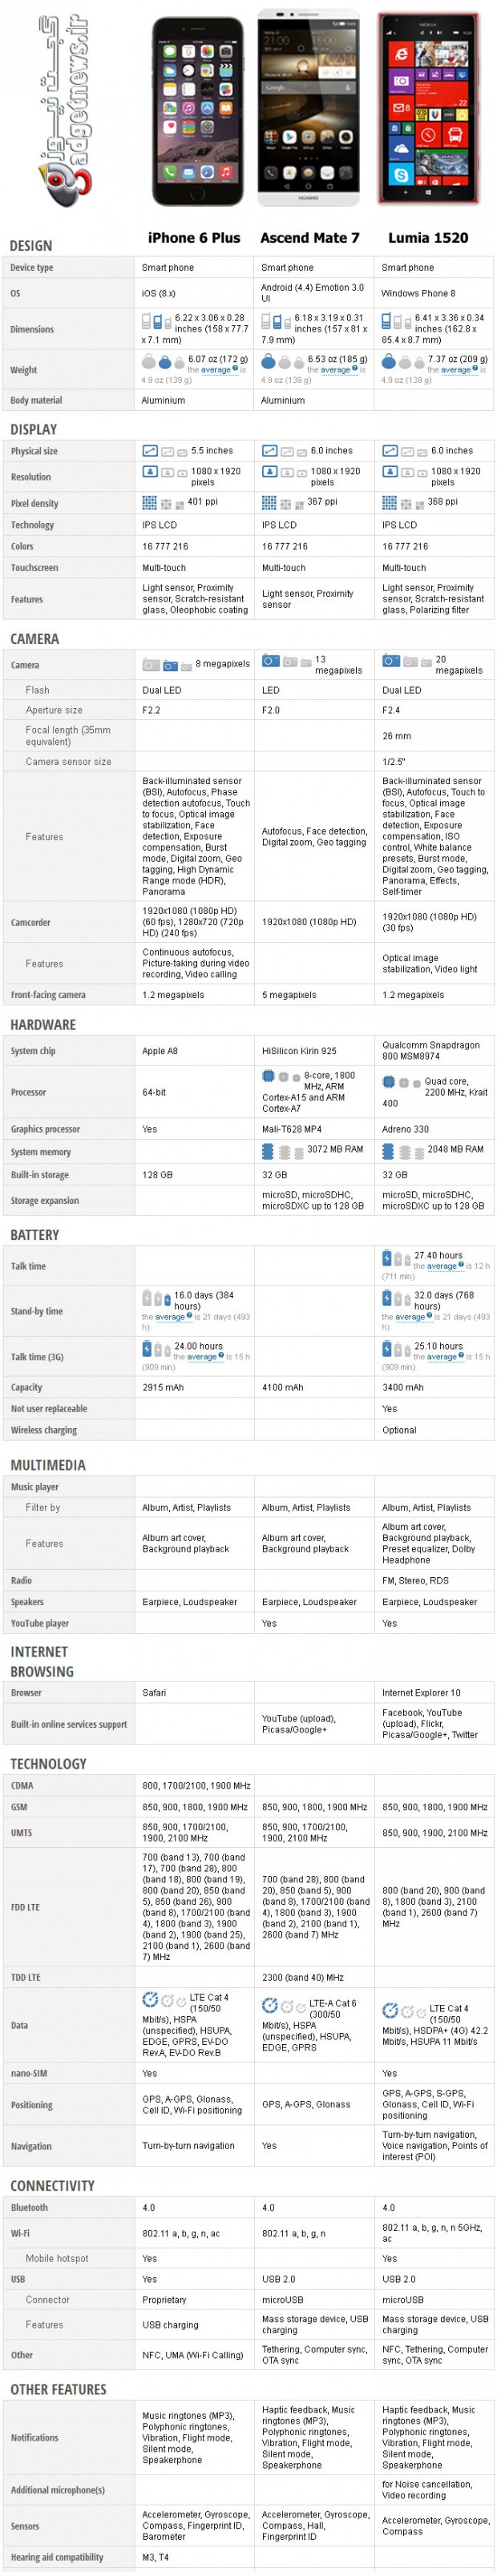 iphone-6-plus-vs-Ascend Mate 7-lumia 1520-1